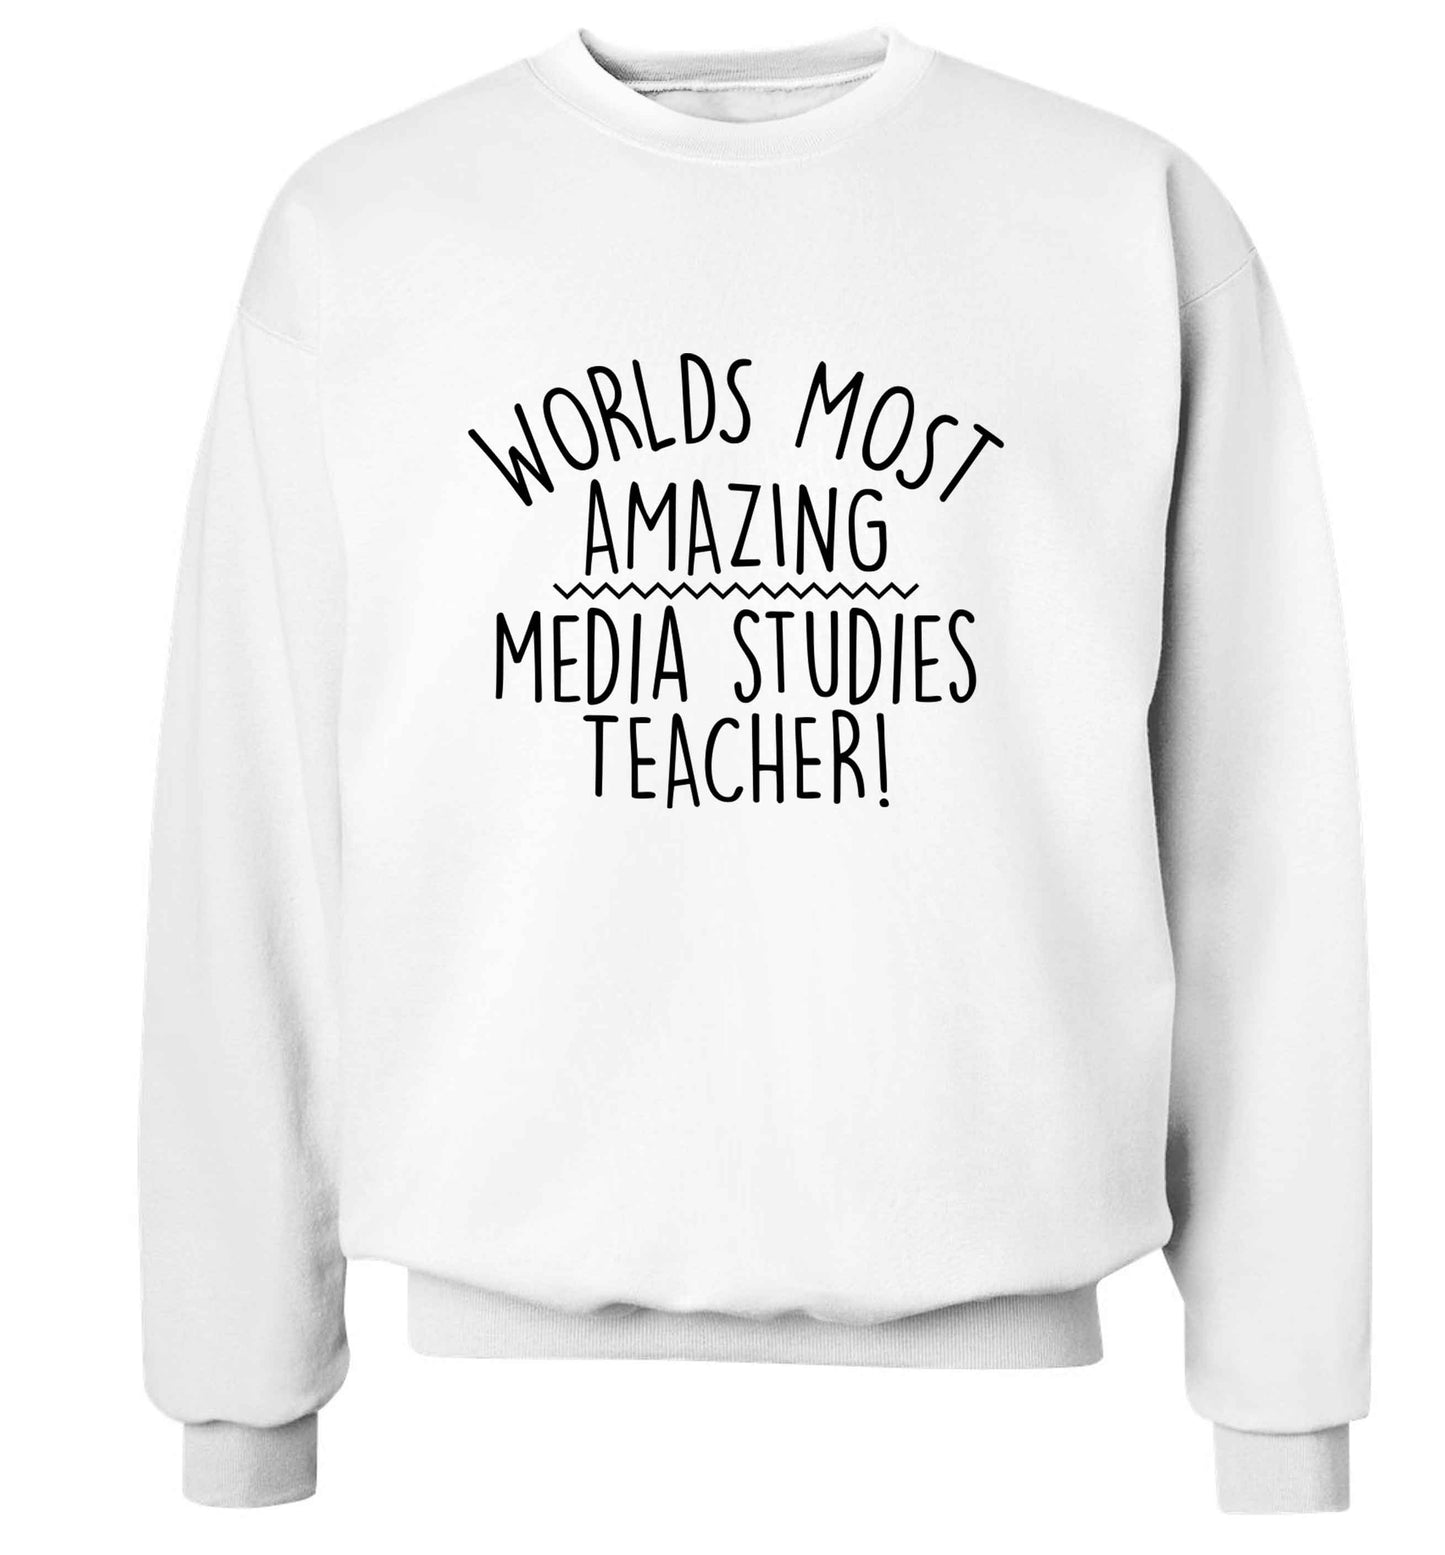 Worlds most amazing media studies teacher adult's unisex white sweater 2XL